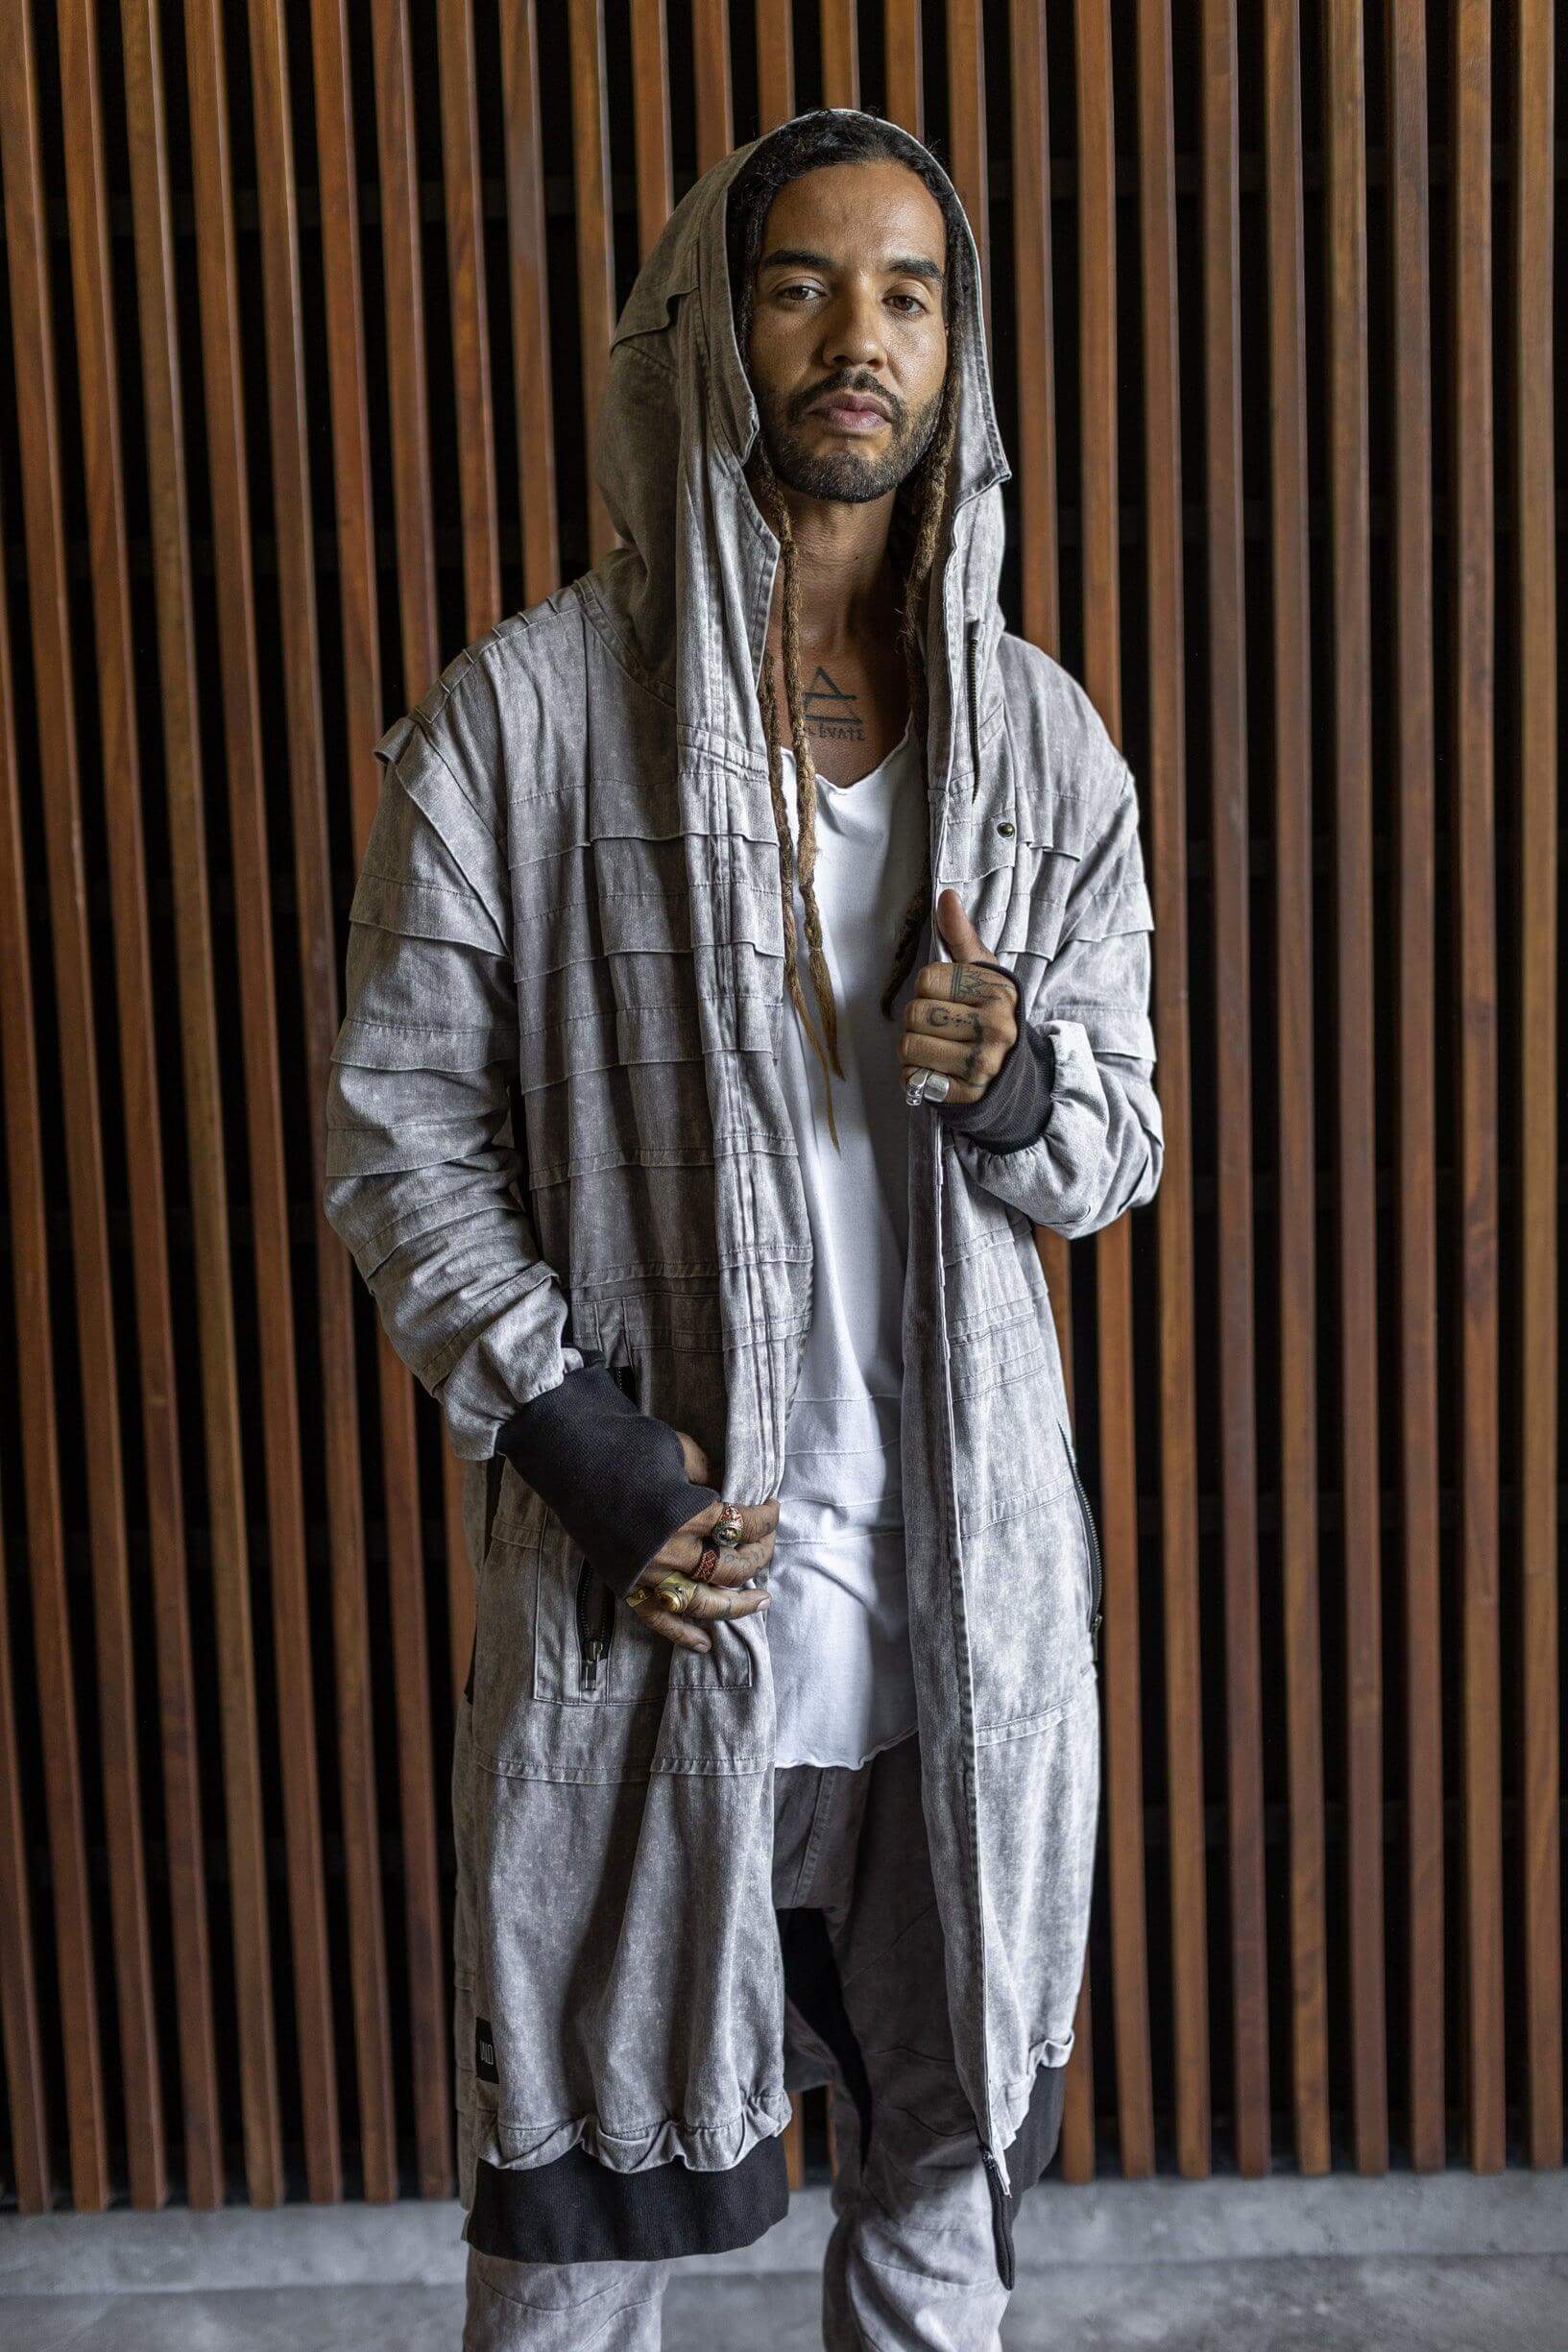 SISU Jacket - A long hooded ninja assassin zipper jacket coat with unique details - VALO Design Clothing 